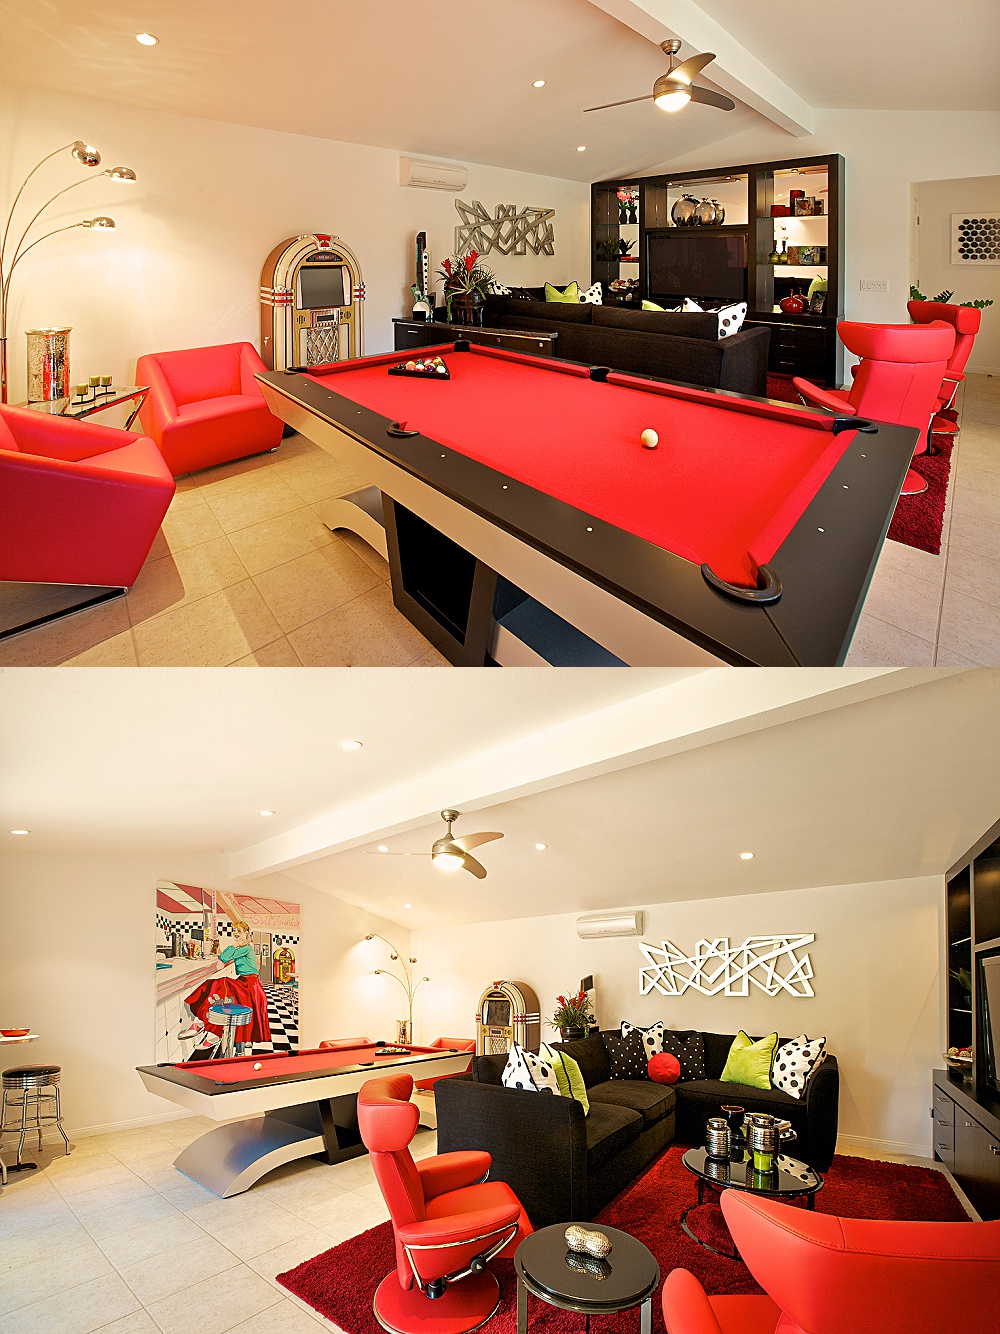 lori_tiedeman_interiors_palm_springs_interior_designer_red_pool_table